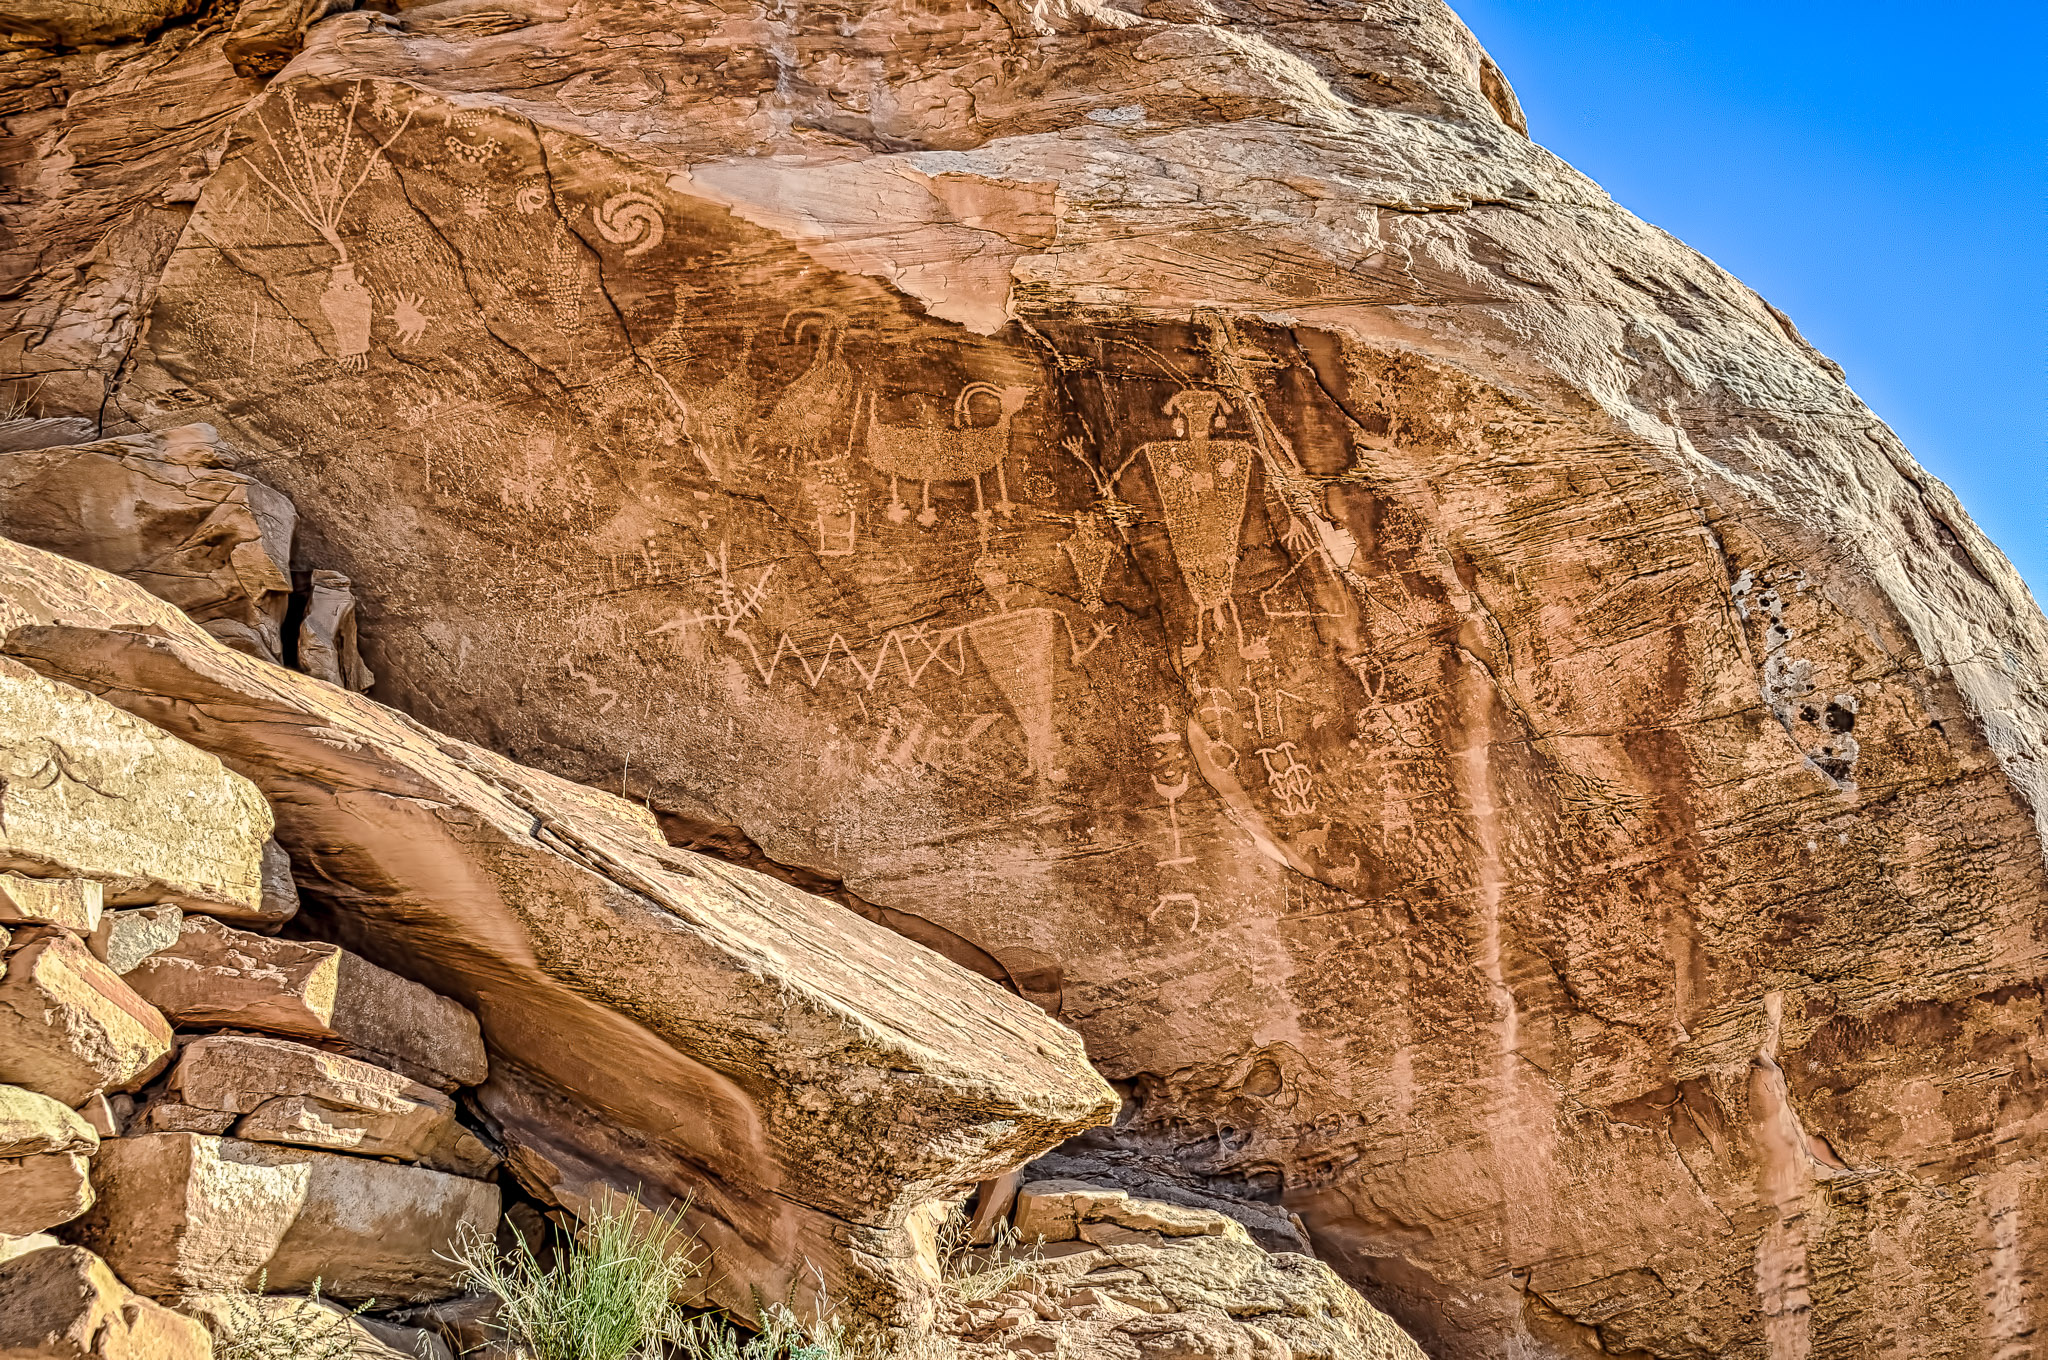 Petroglyphs on rock overlooking Cub Creek In Dinosaur National Monument.